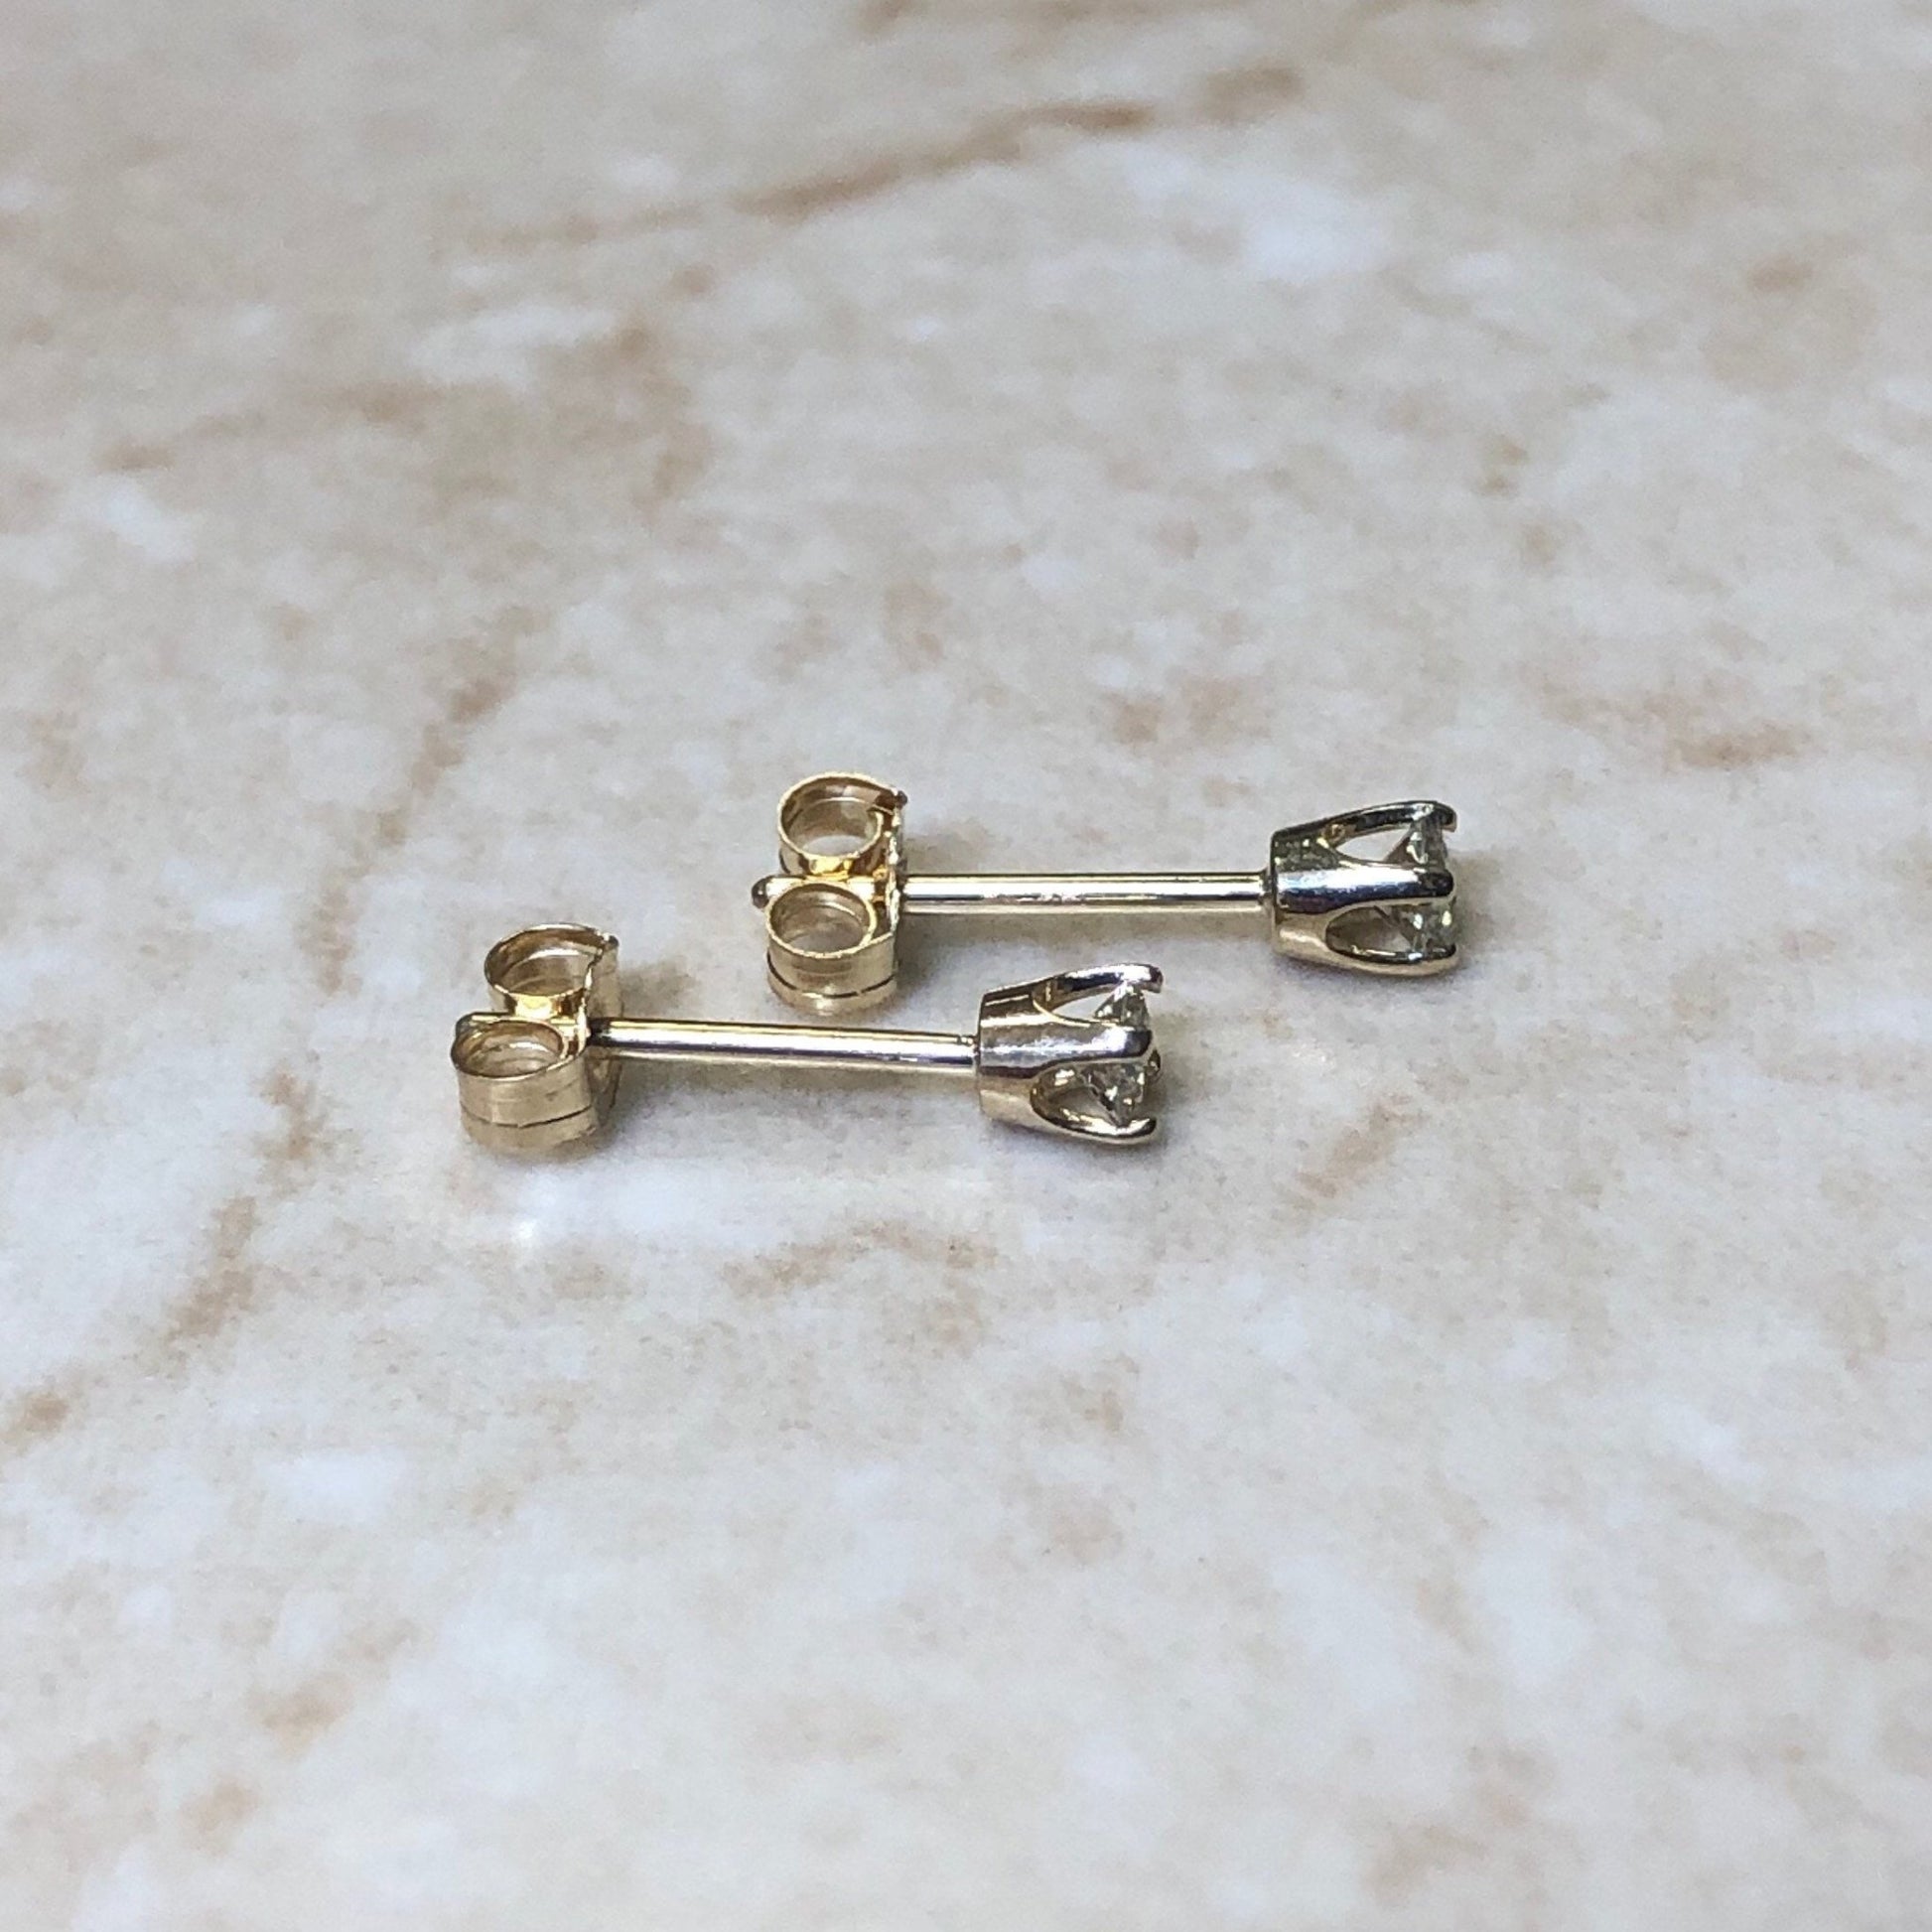 14 Karat Yellow Gold 0.15 CTTW Natural Diamond Stud Earrings With Push Backs - Birthday Gift